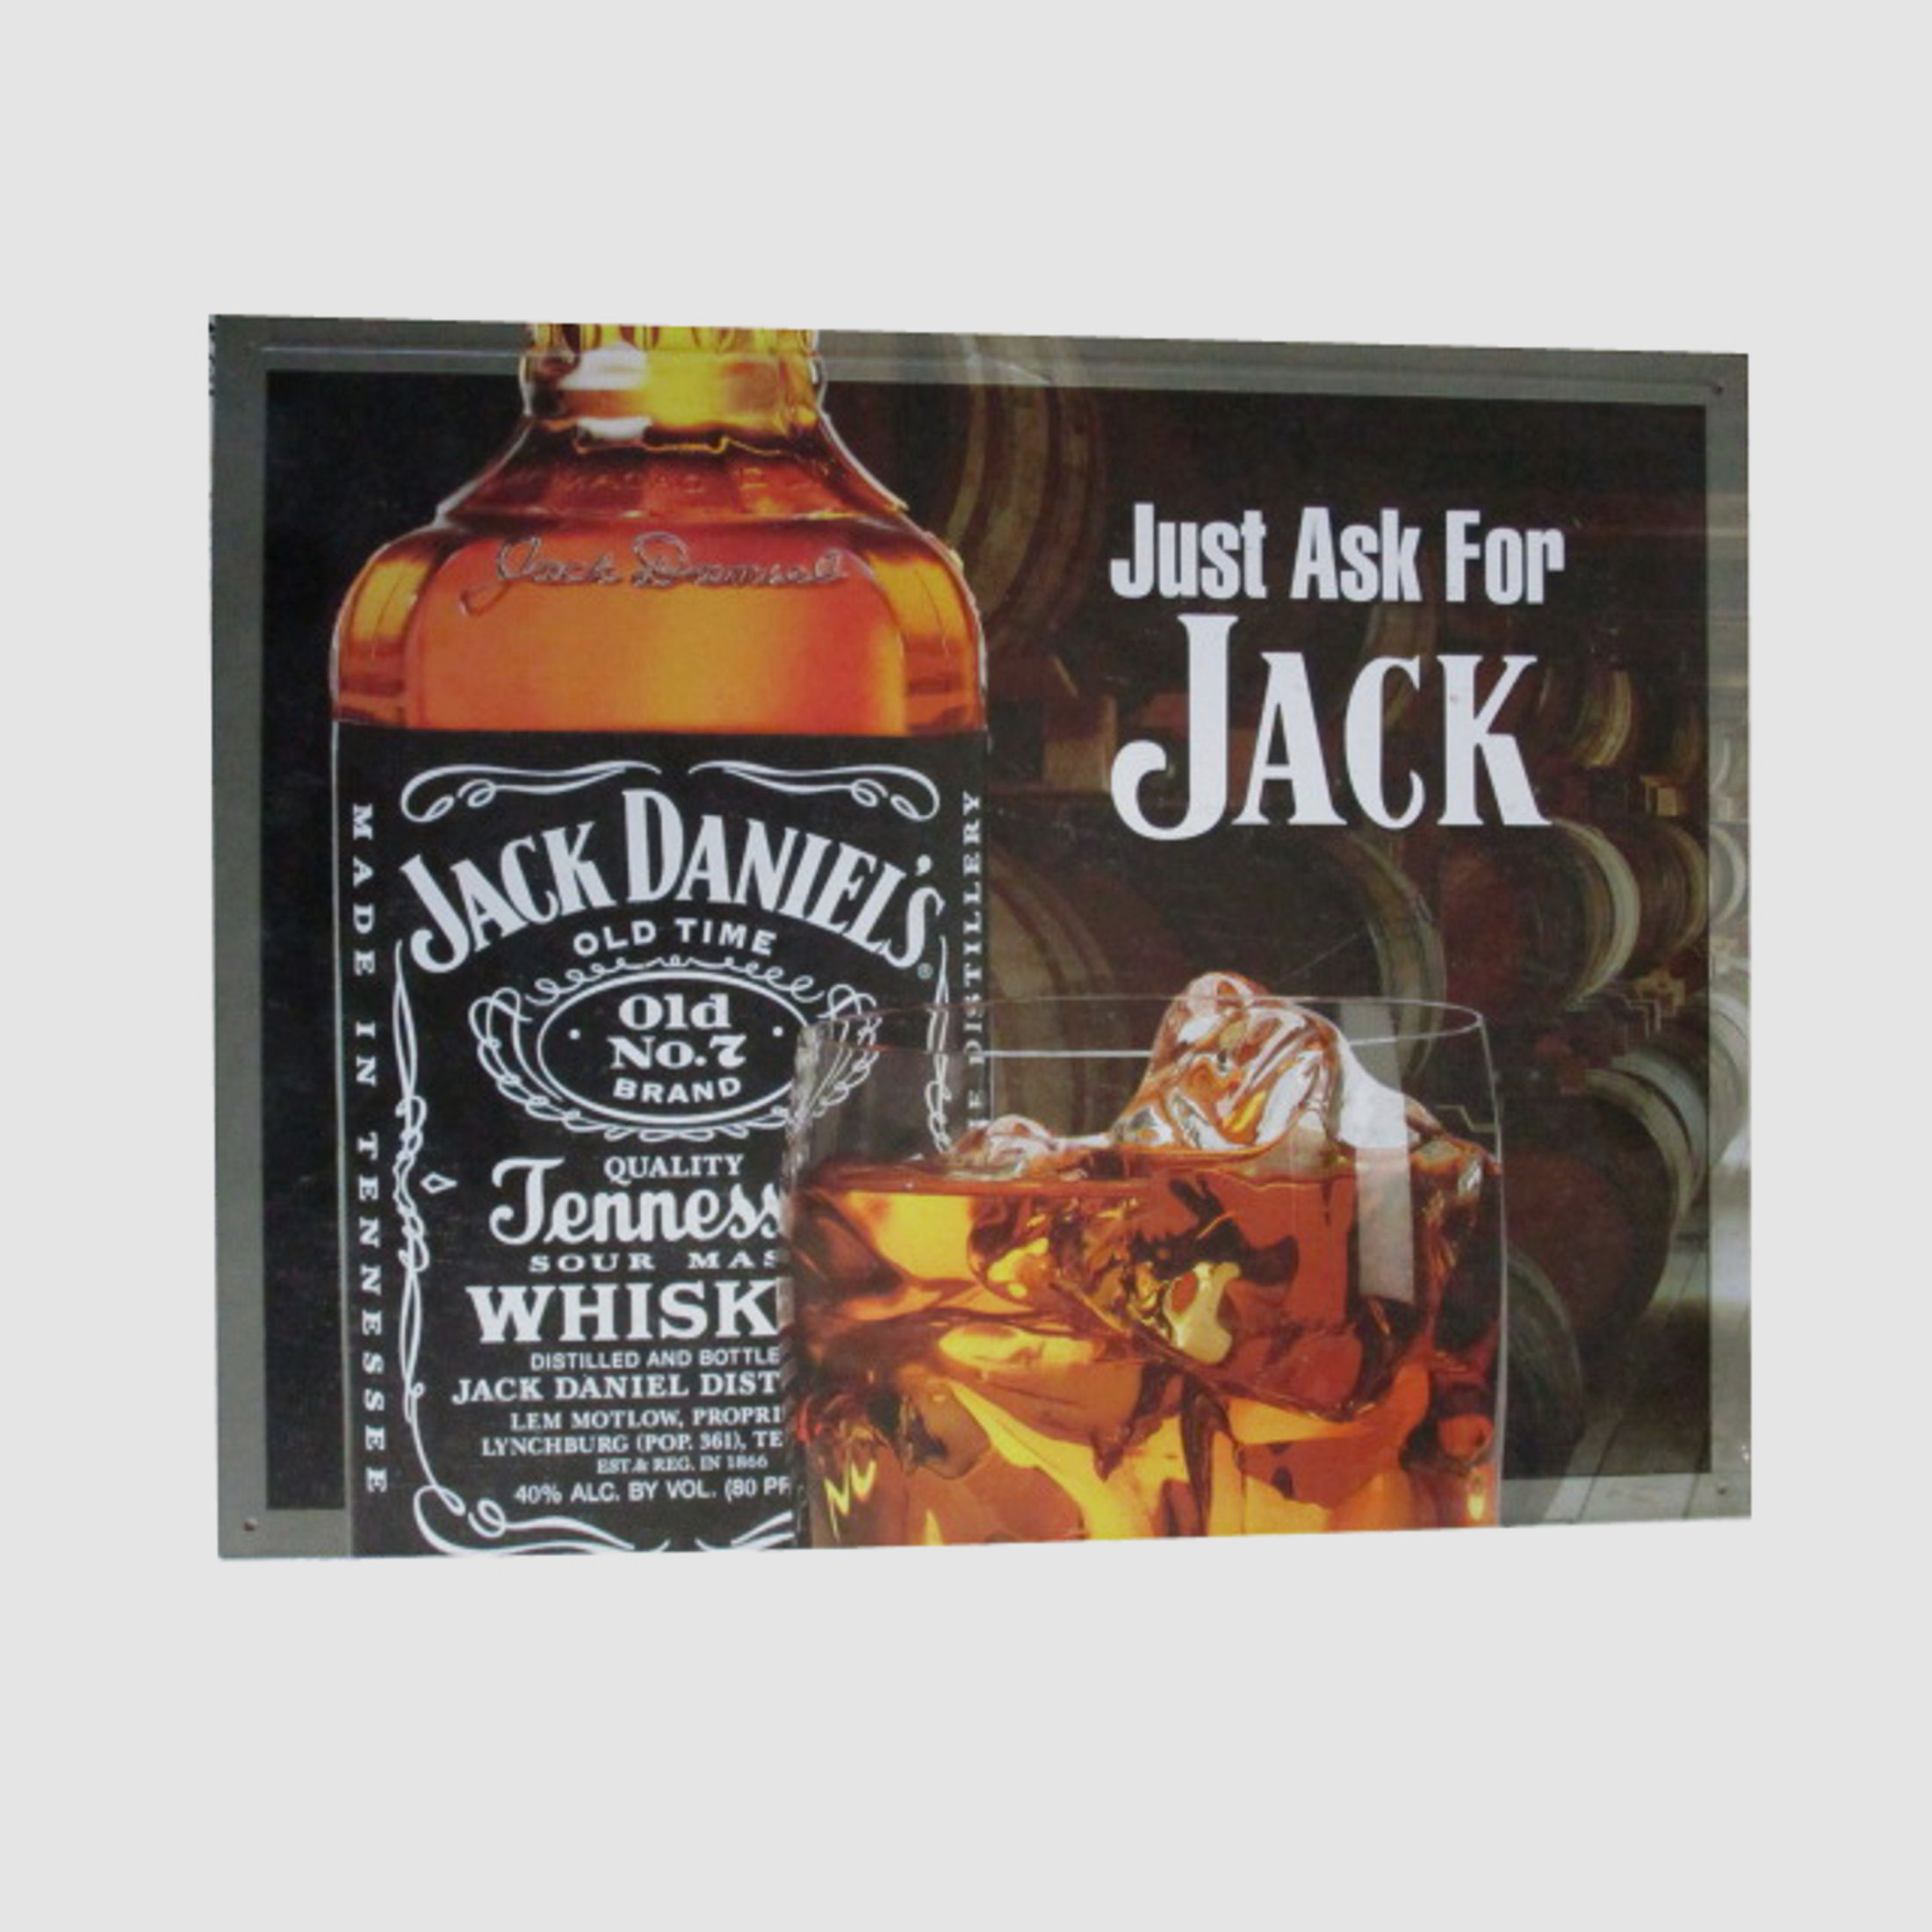 Blechschild "Just Ask for Jack"